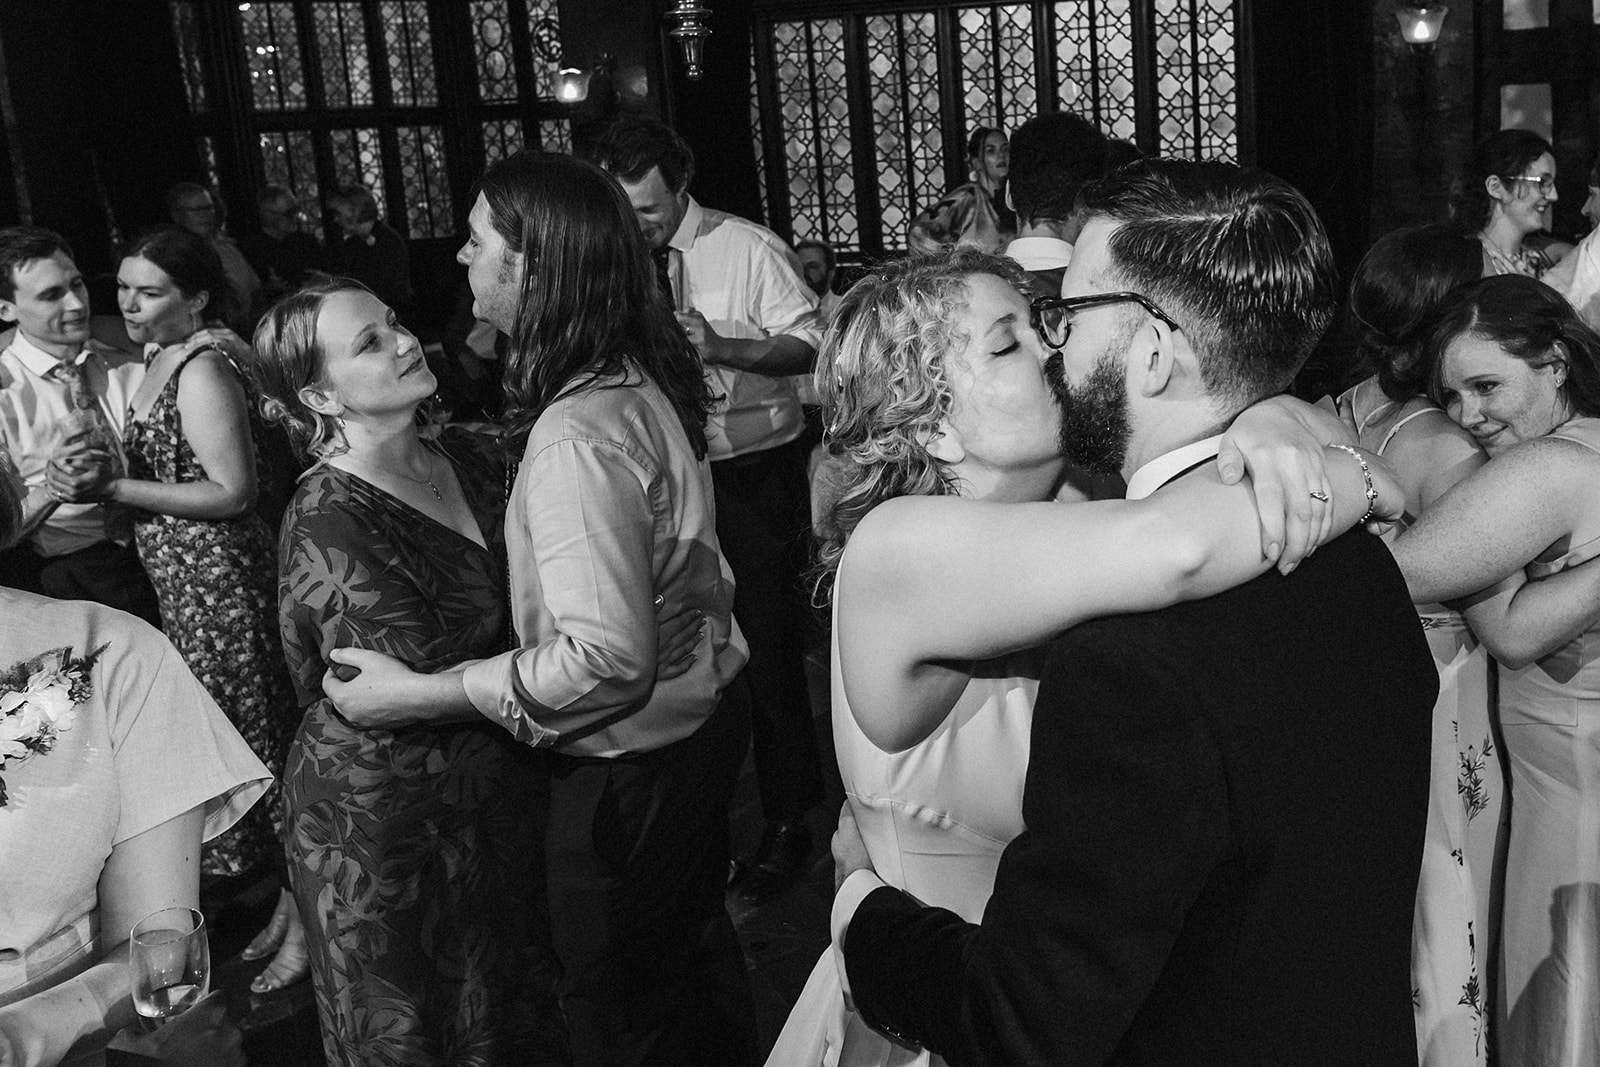 dancefloor kiss, bramall hall wedding photography 